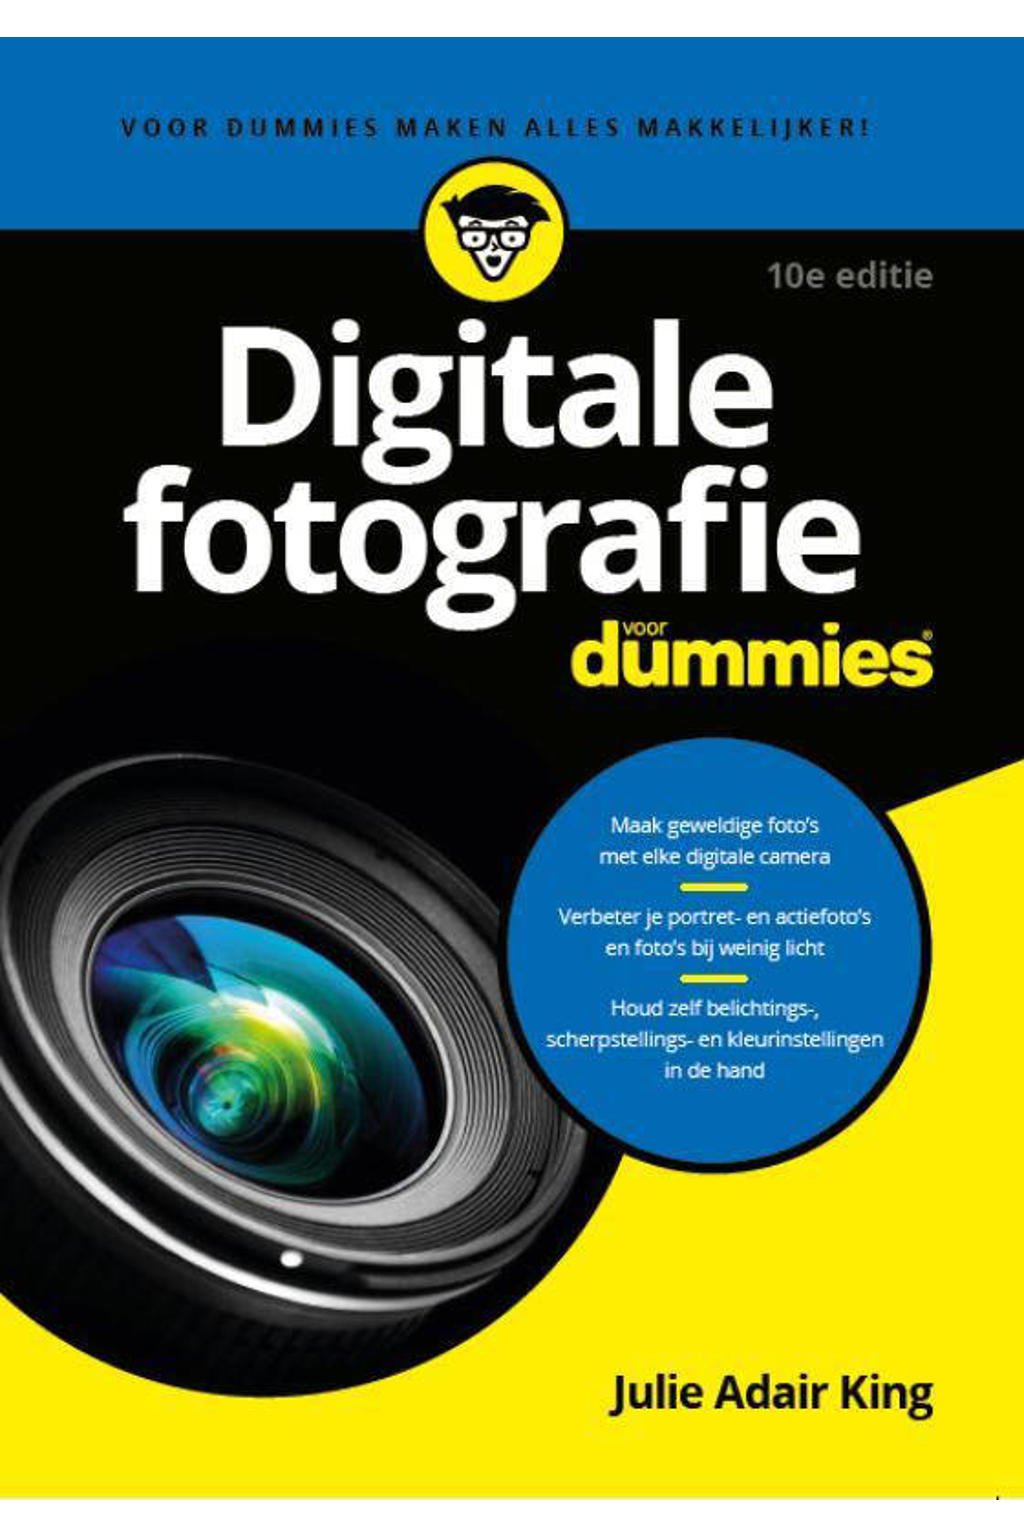 Digitale fotografie voor Dummies, 10e editie - Julie Adair King